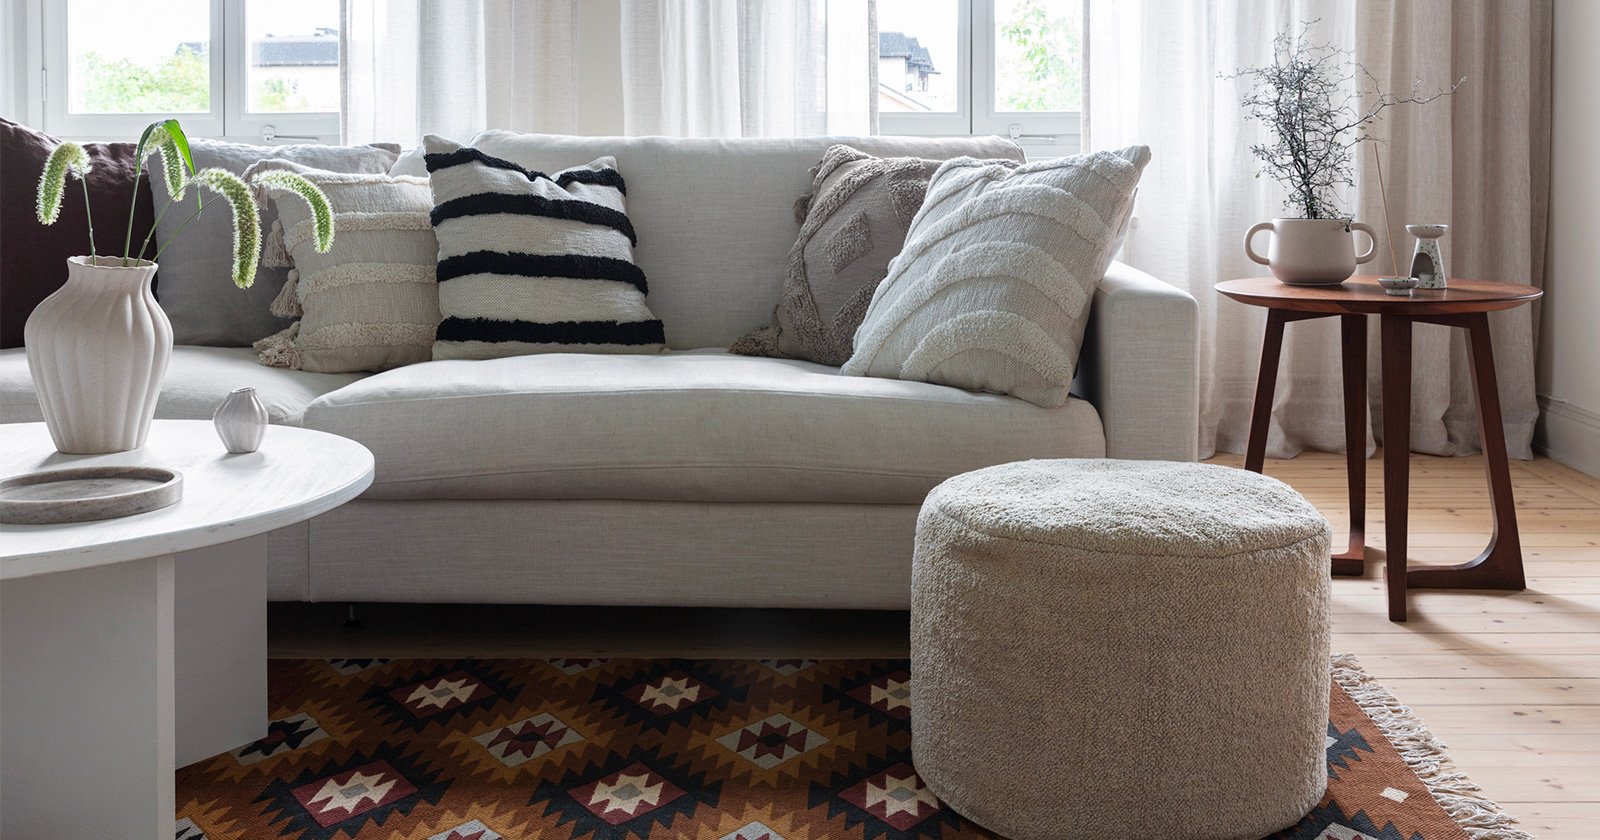 En stue med en hvit sofa med duskete puter, et fargerikt og mønstret teppe med en puff stående på det